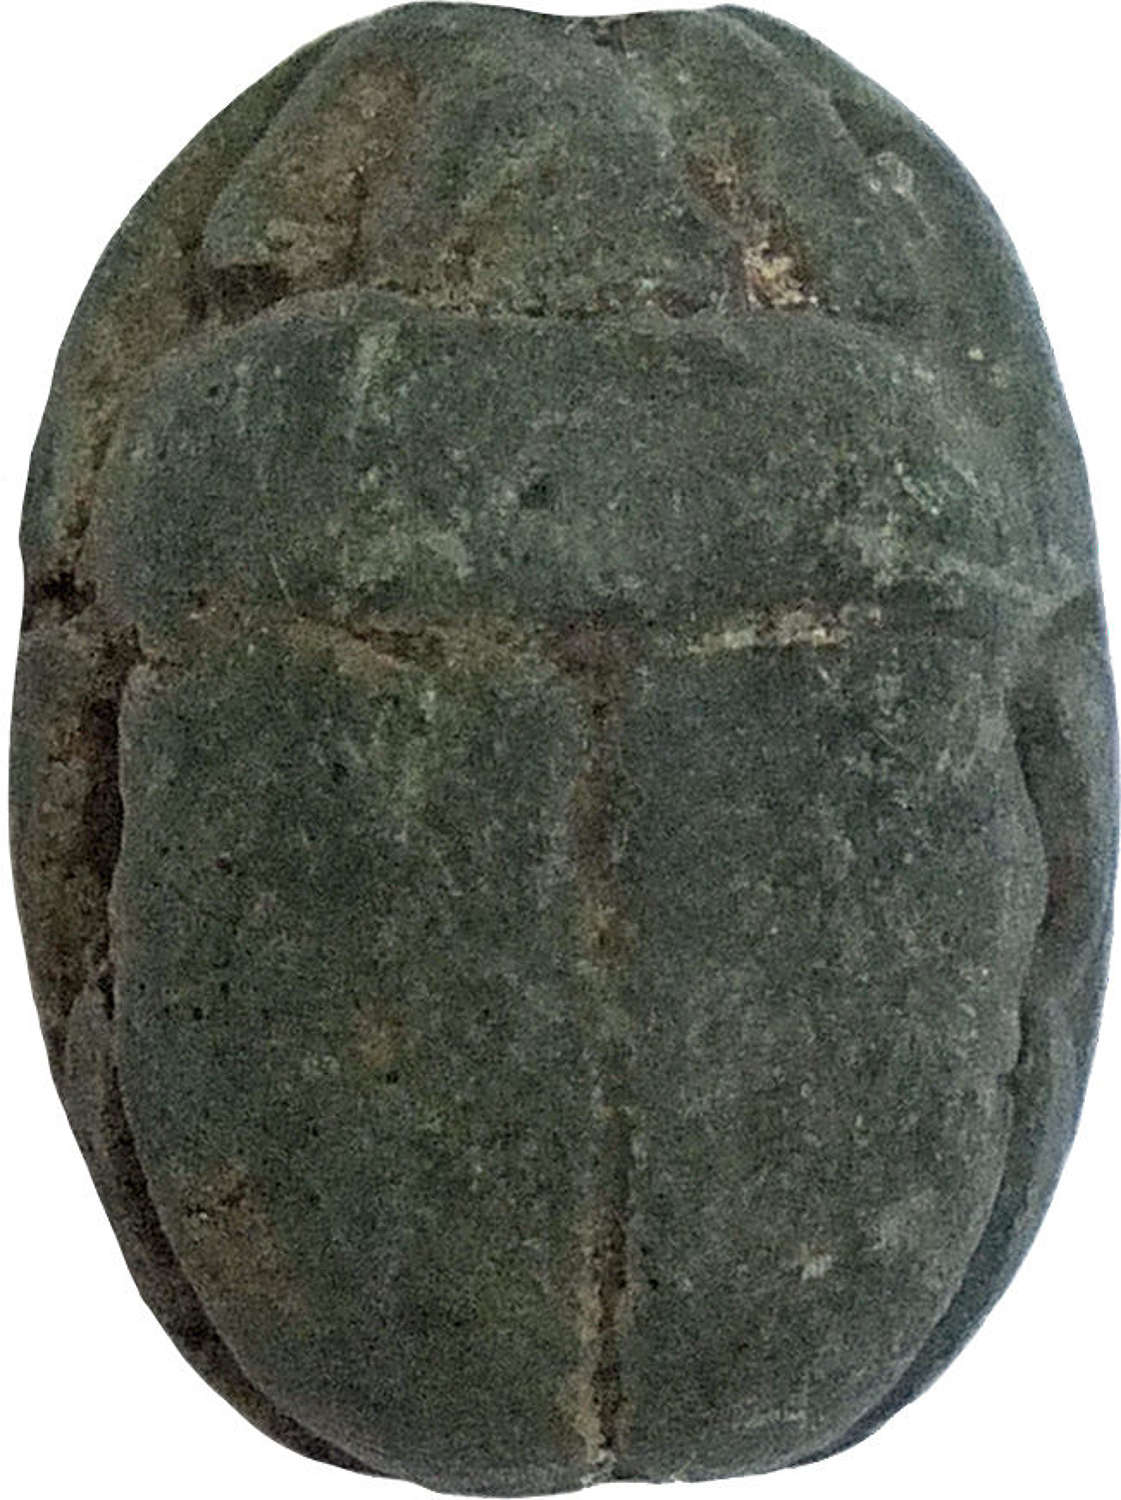 An Egyptian blue steatite scarab, c. 2nd Millennium B.C.